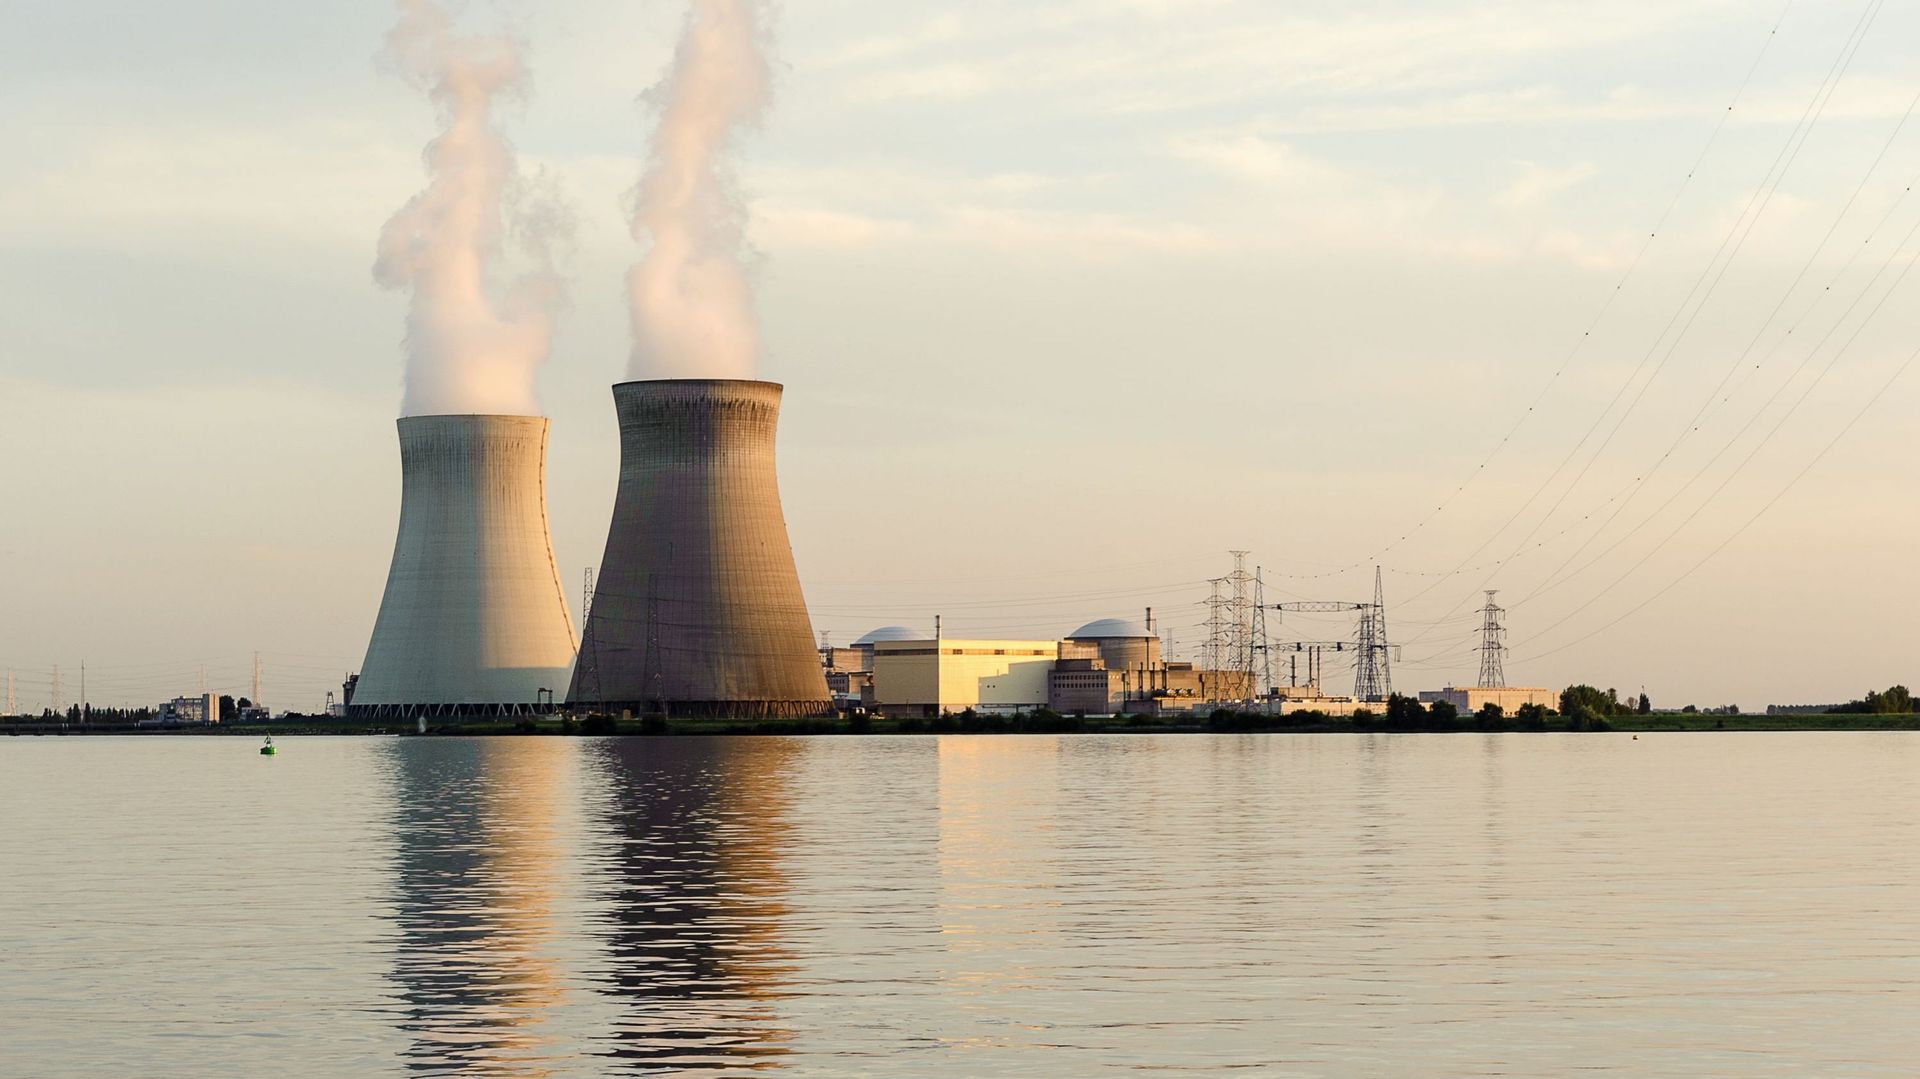 Nuclear power plant, Doel, Belgium.